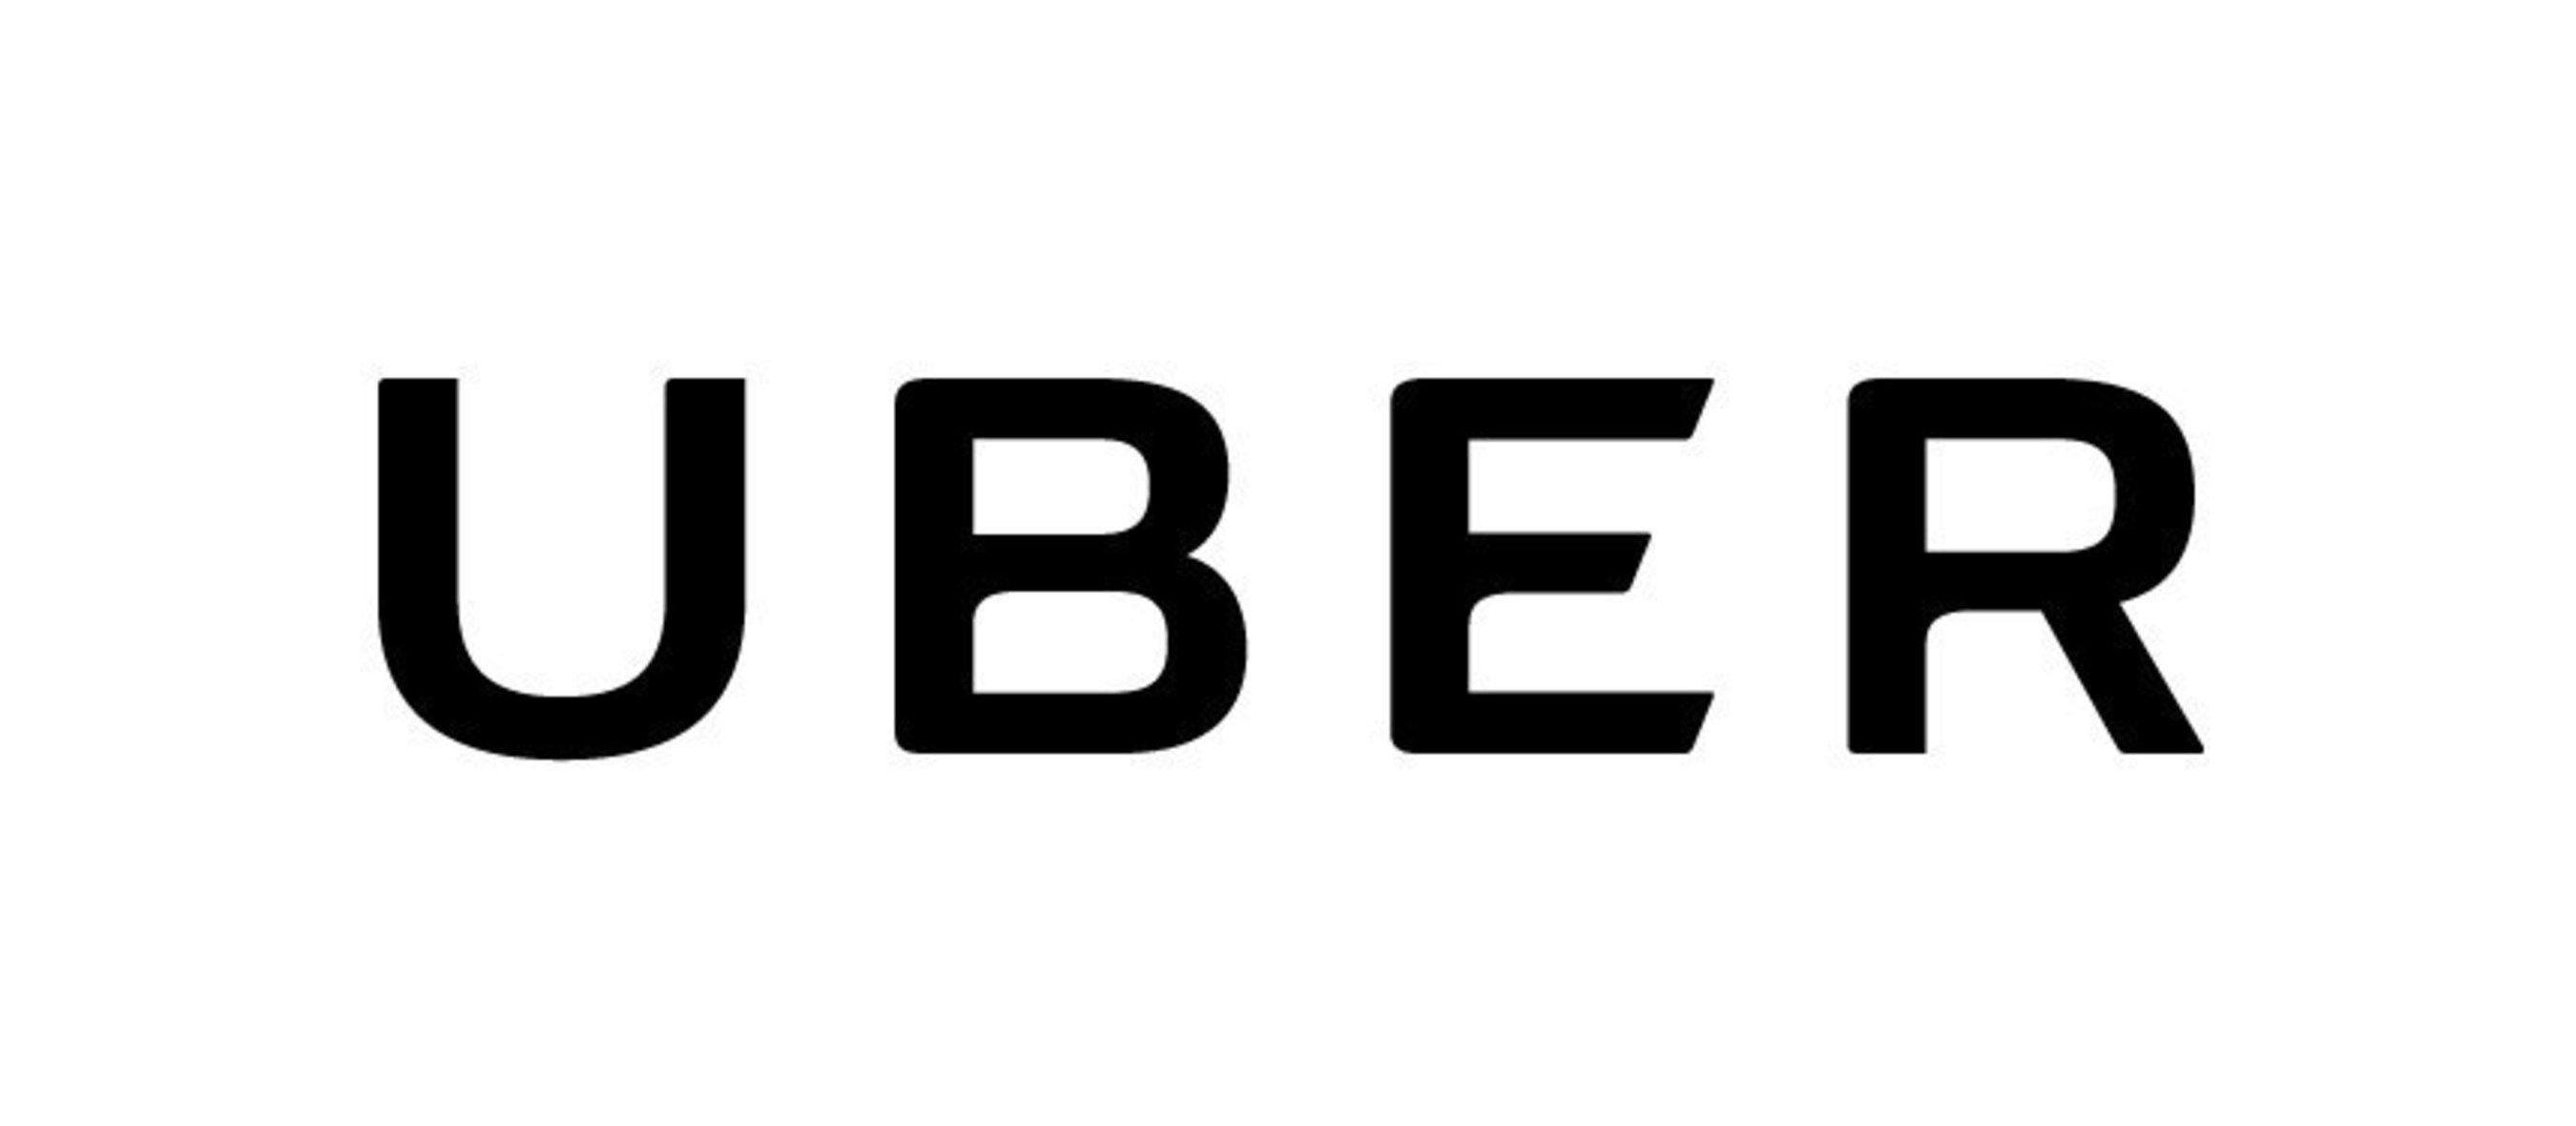 HackensackUMC Logo - Uber, HackensackUMC Team Up for Nation's First Rideshare-Hospital ...